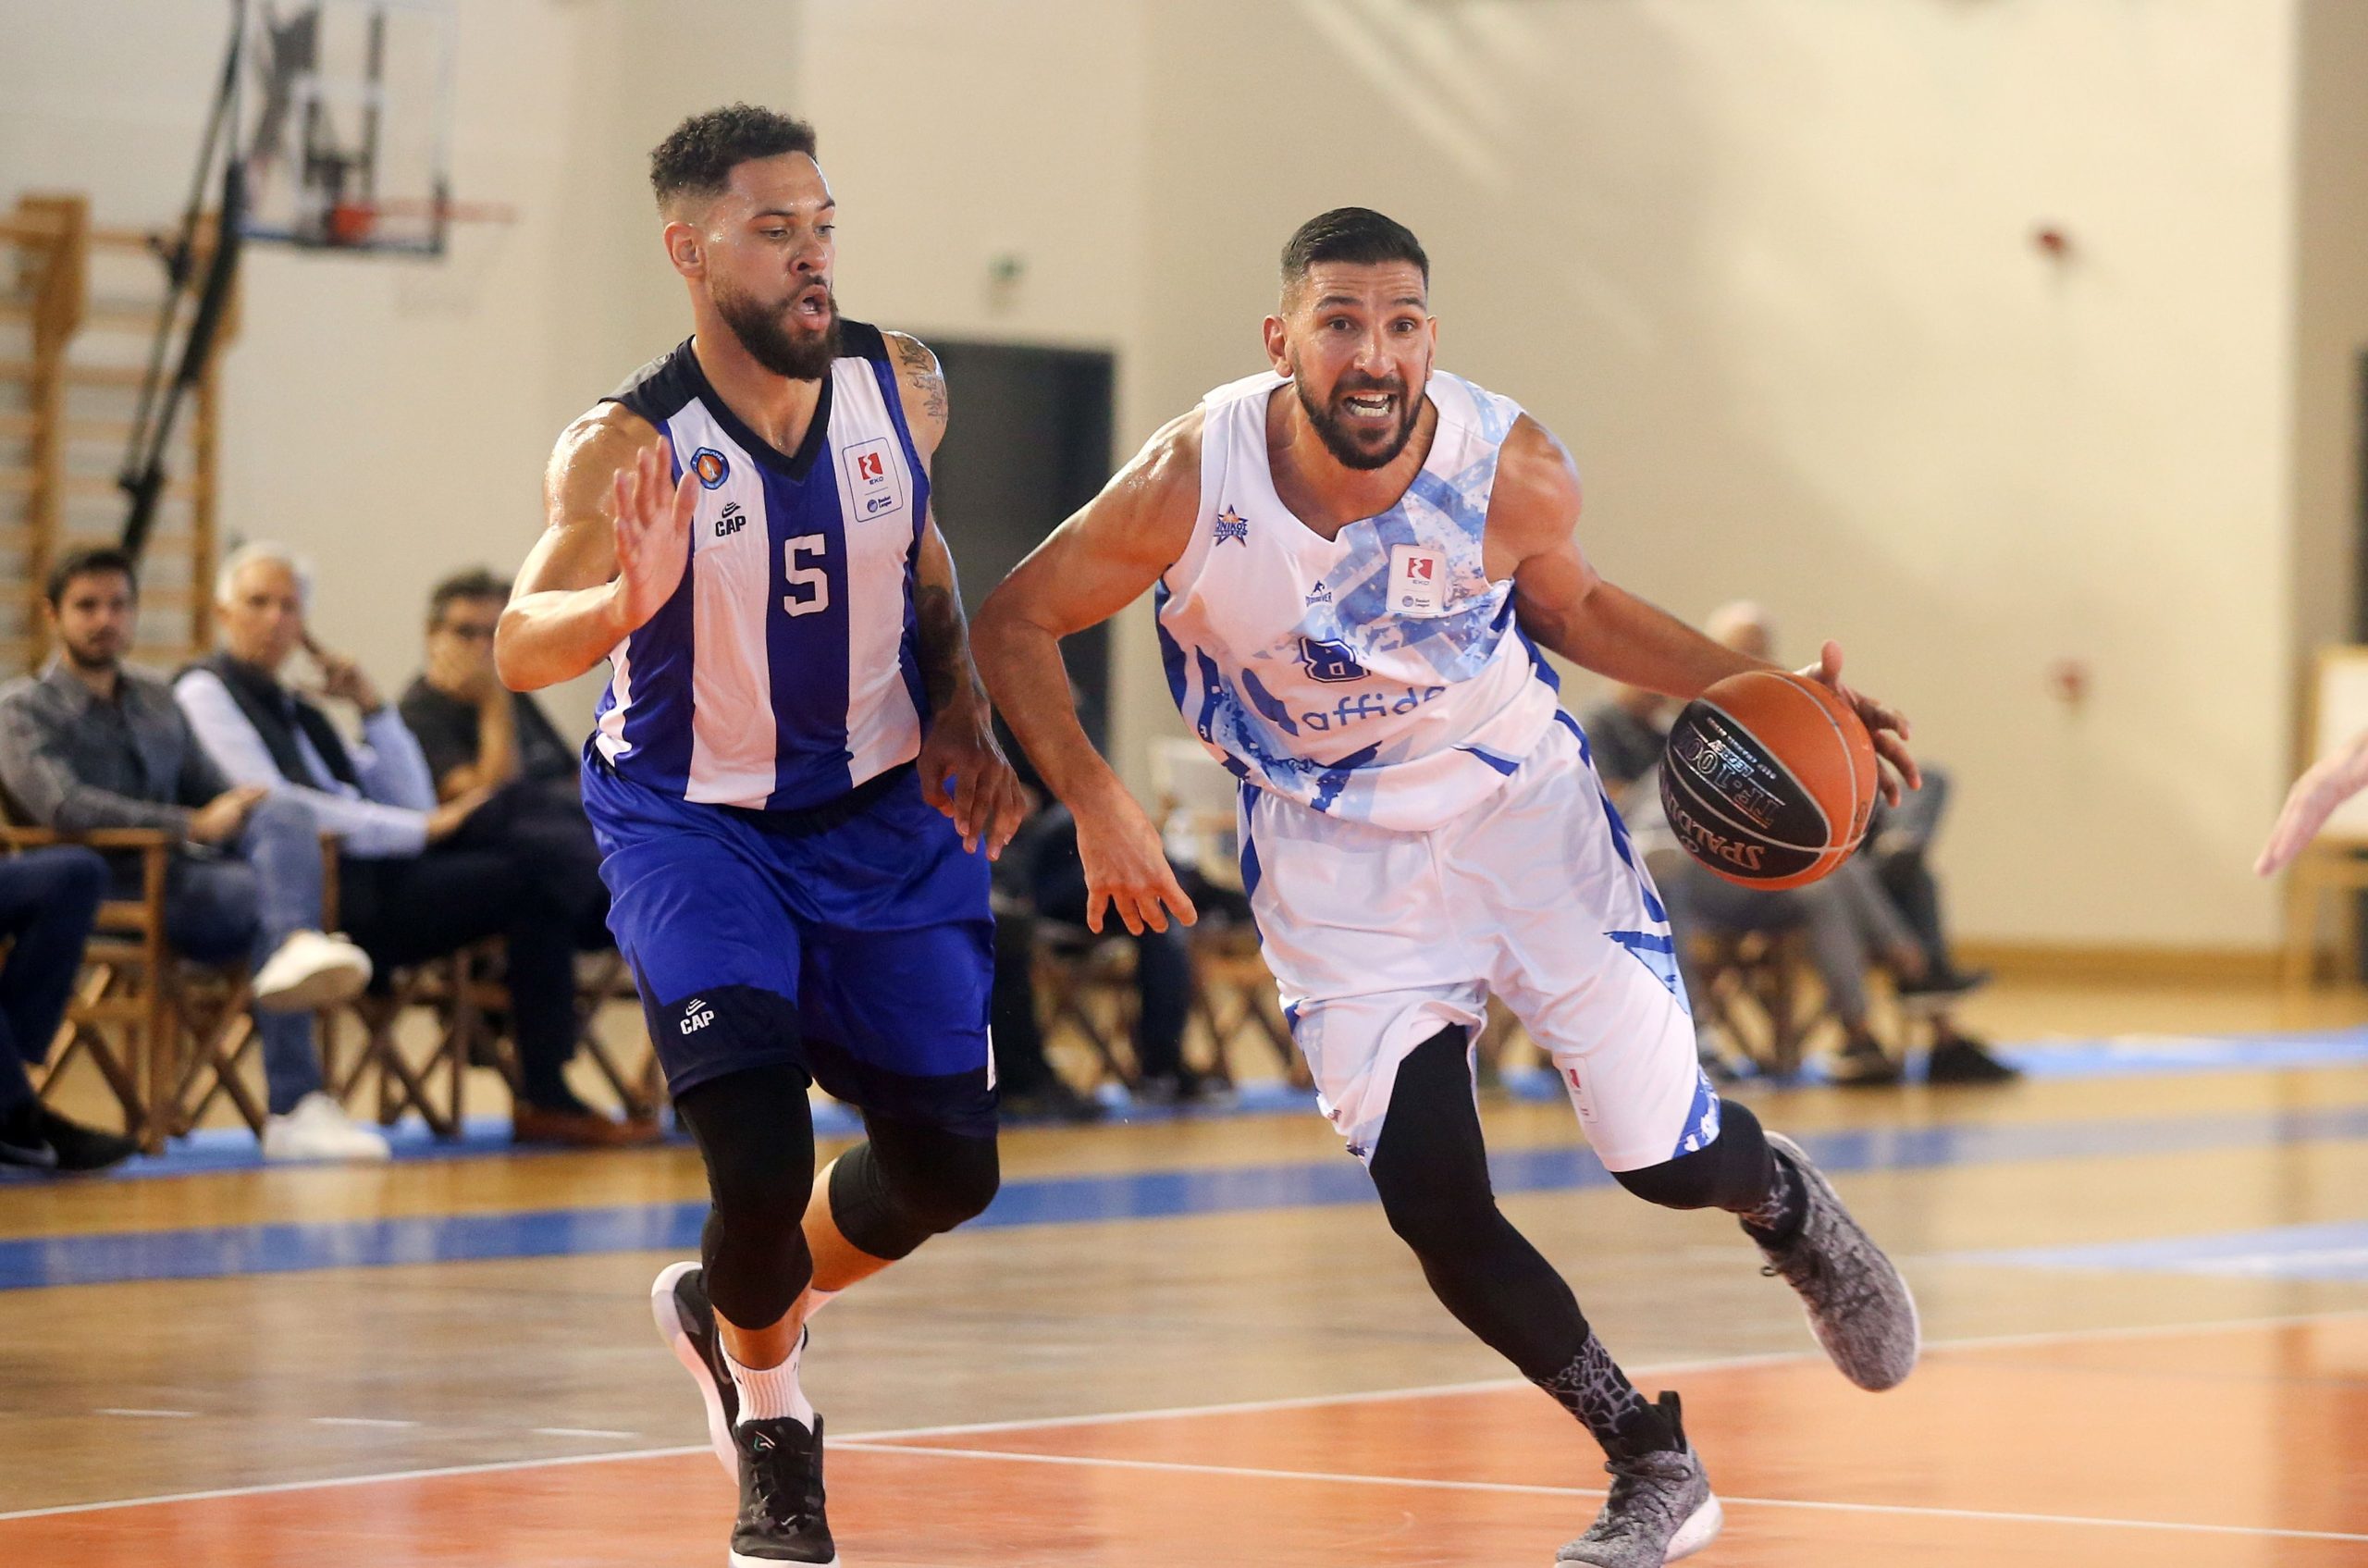 Basket League: Ολοκληρώνεται η 19η αγωνιστική με το ντέρμπι ανάμεσα σε Ηρακλή και Ιωνικό